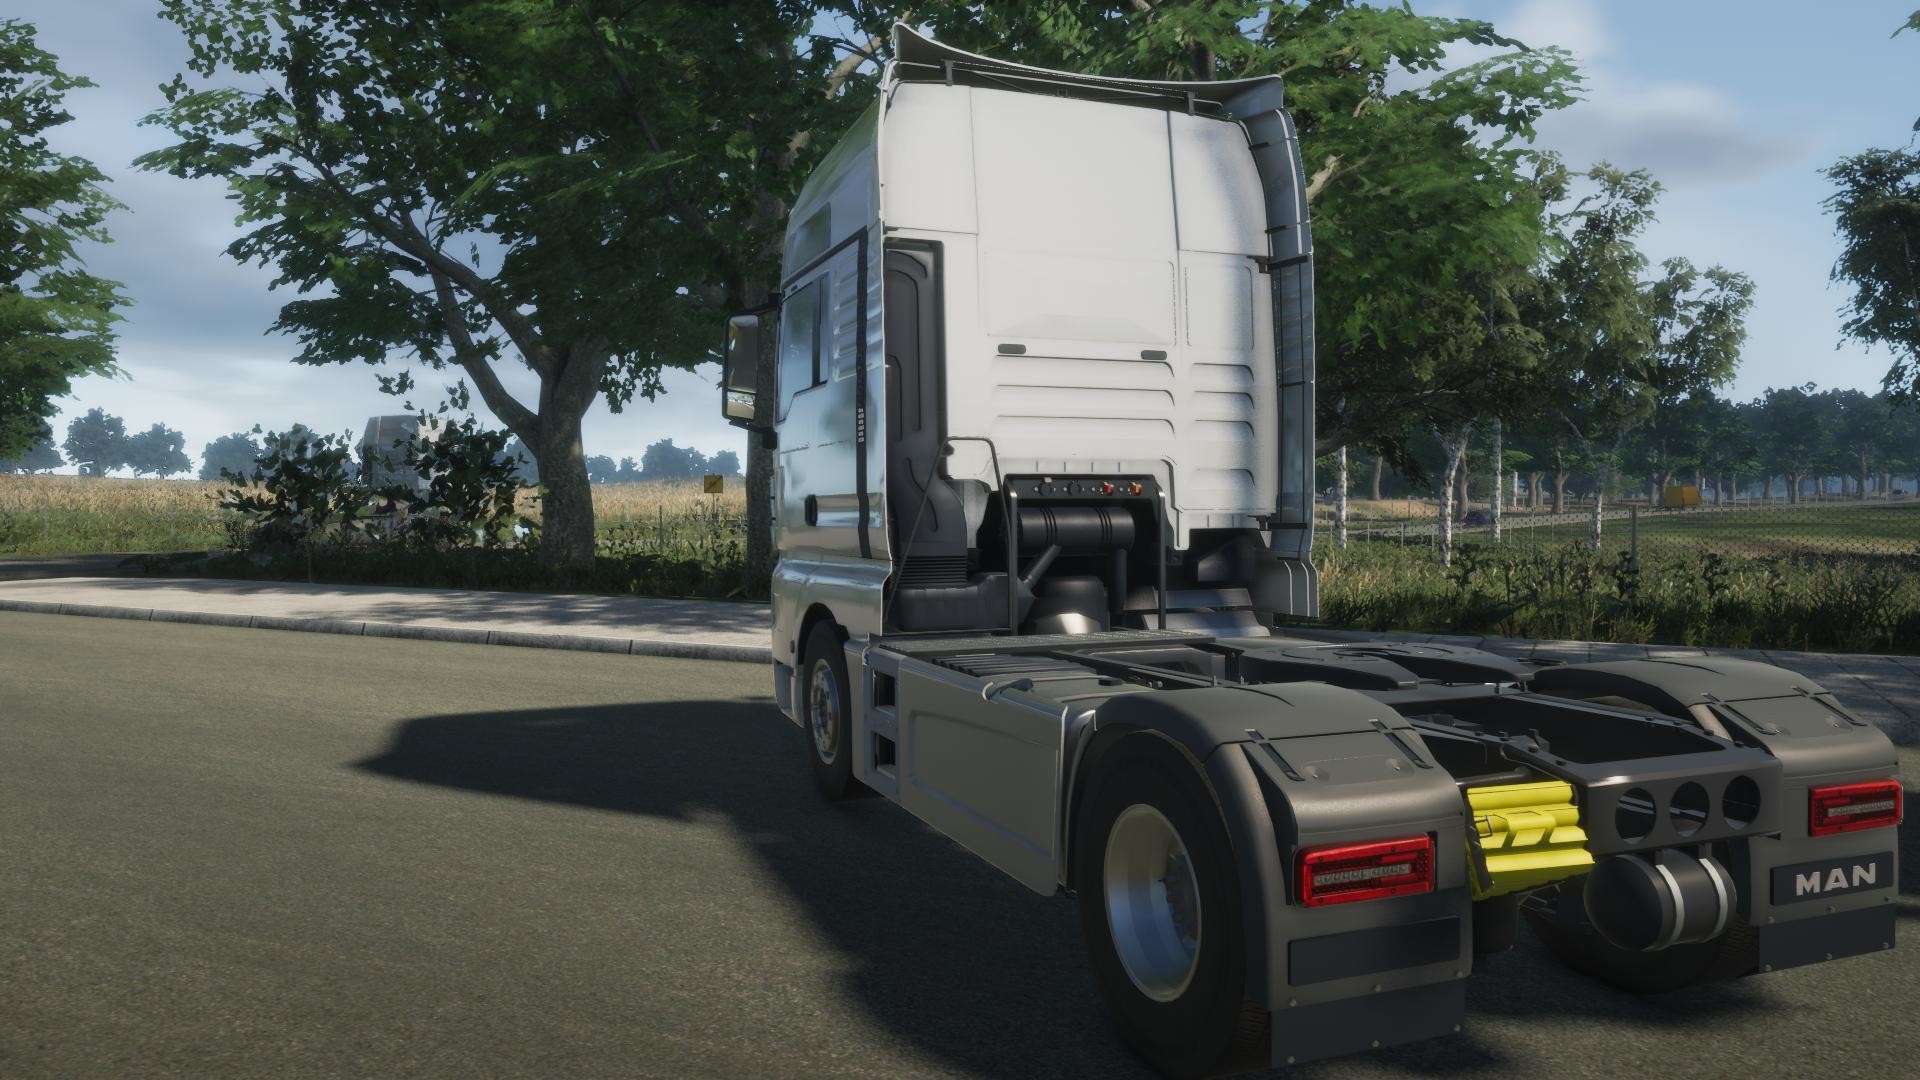 On The Road The Truck Simulator Xbox One + Brinde - RIOS VARIEDADES